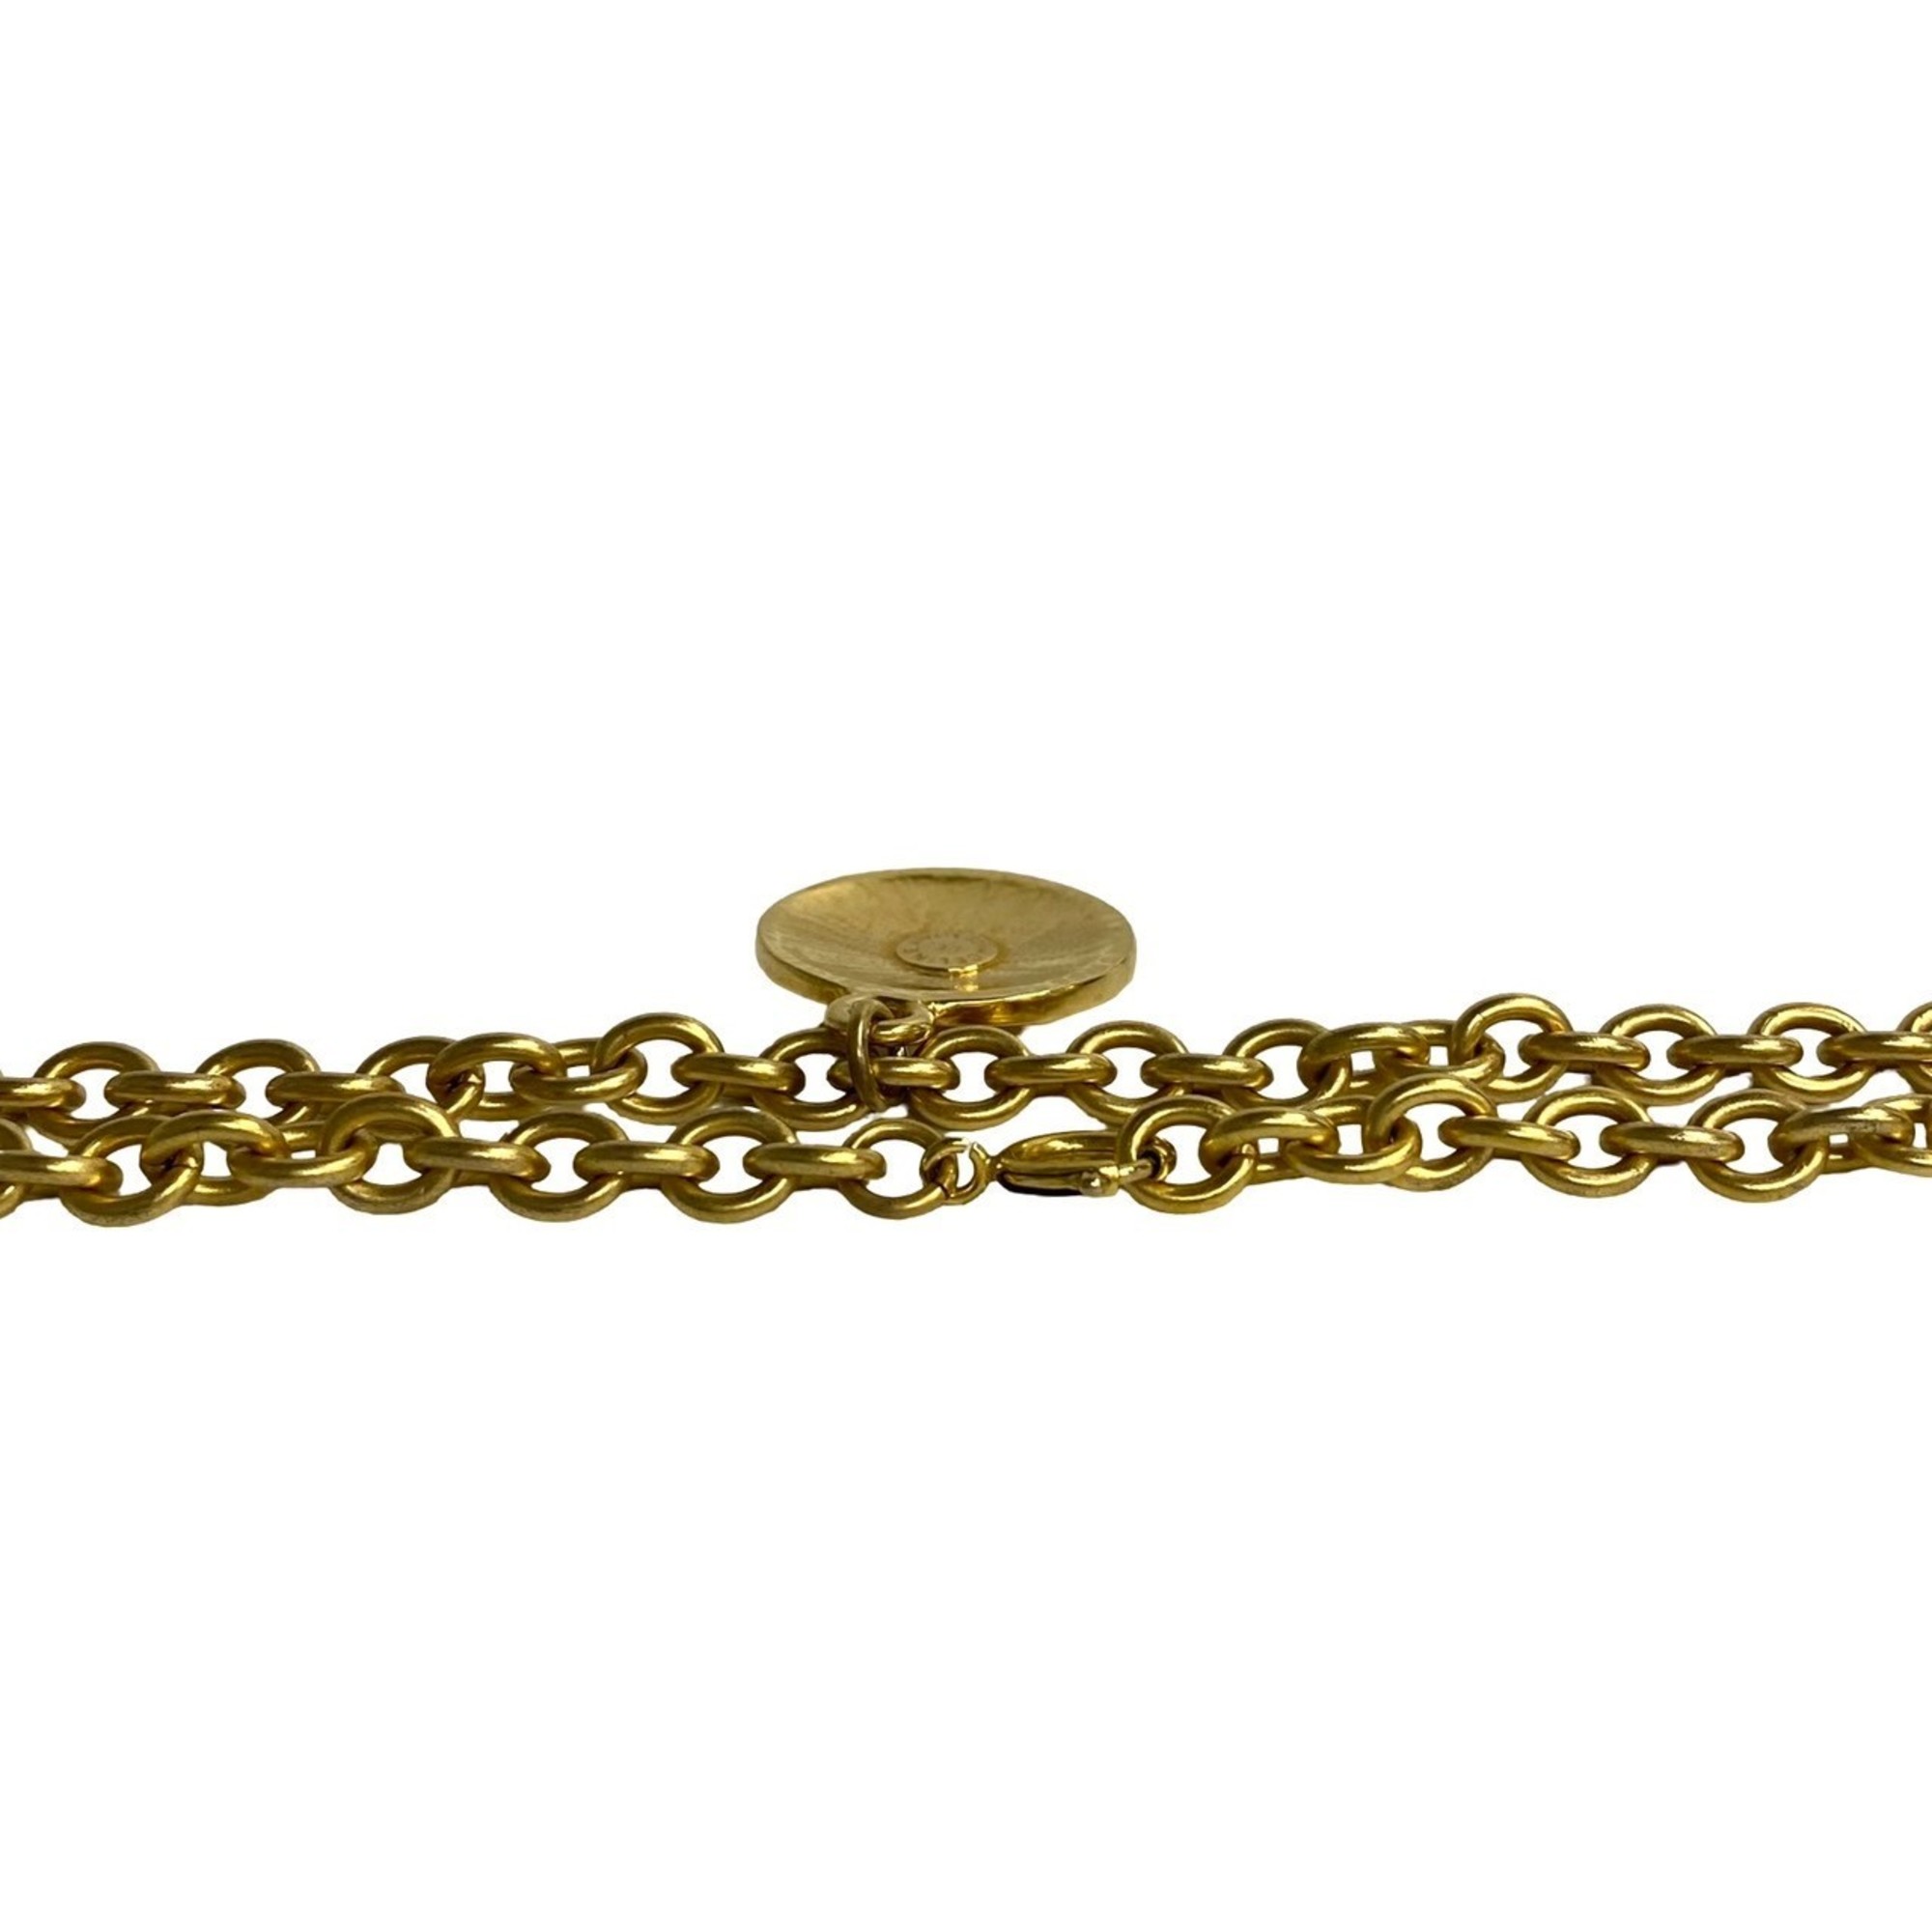 CELINE Triomphe Chain Necklace Pendant Choker Gold 45410